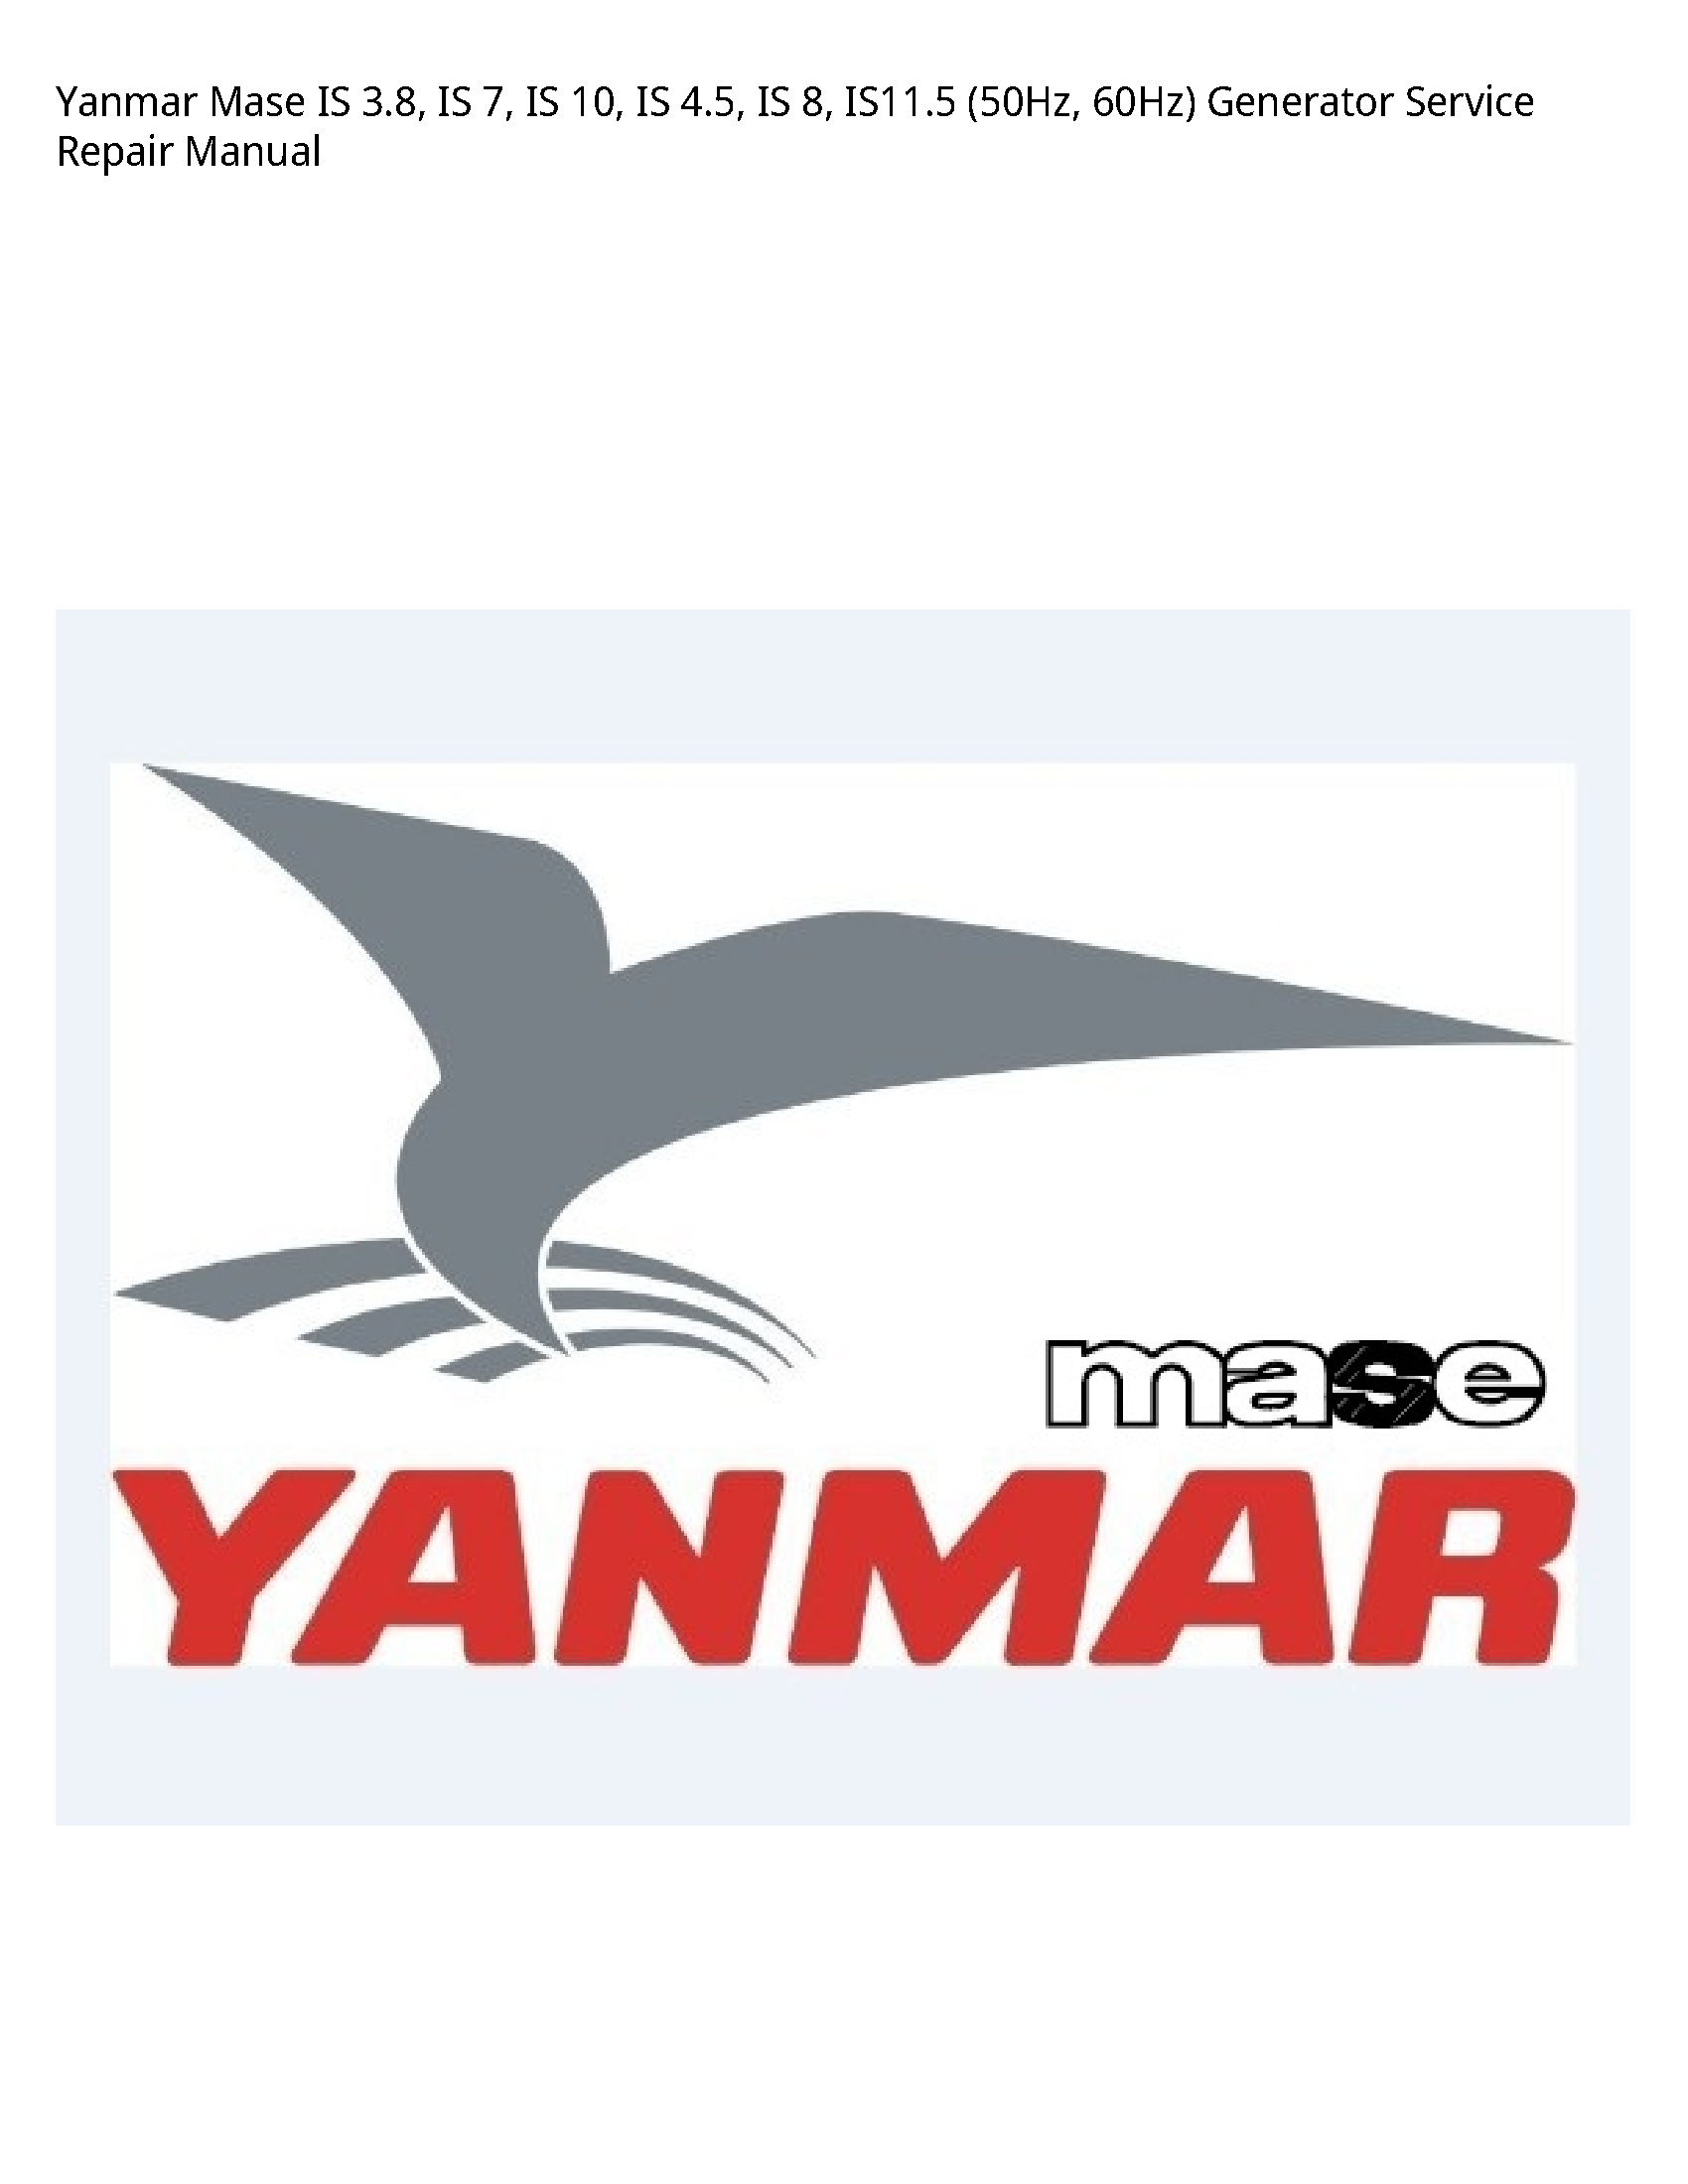 Yanmar 3.8 Mase IS IS IS IS IS Generator manual